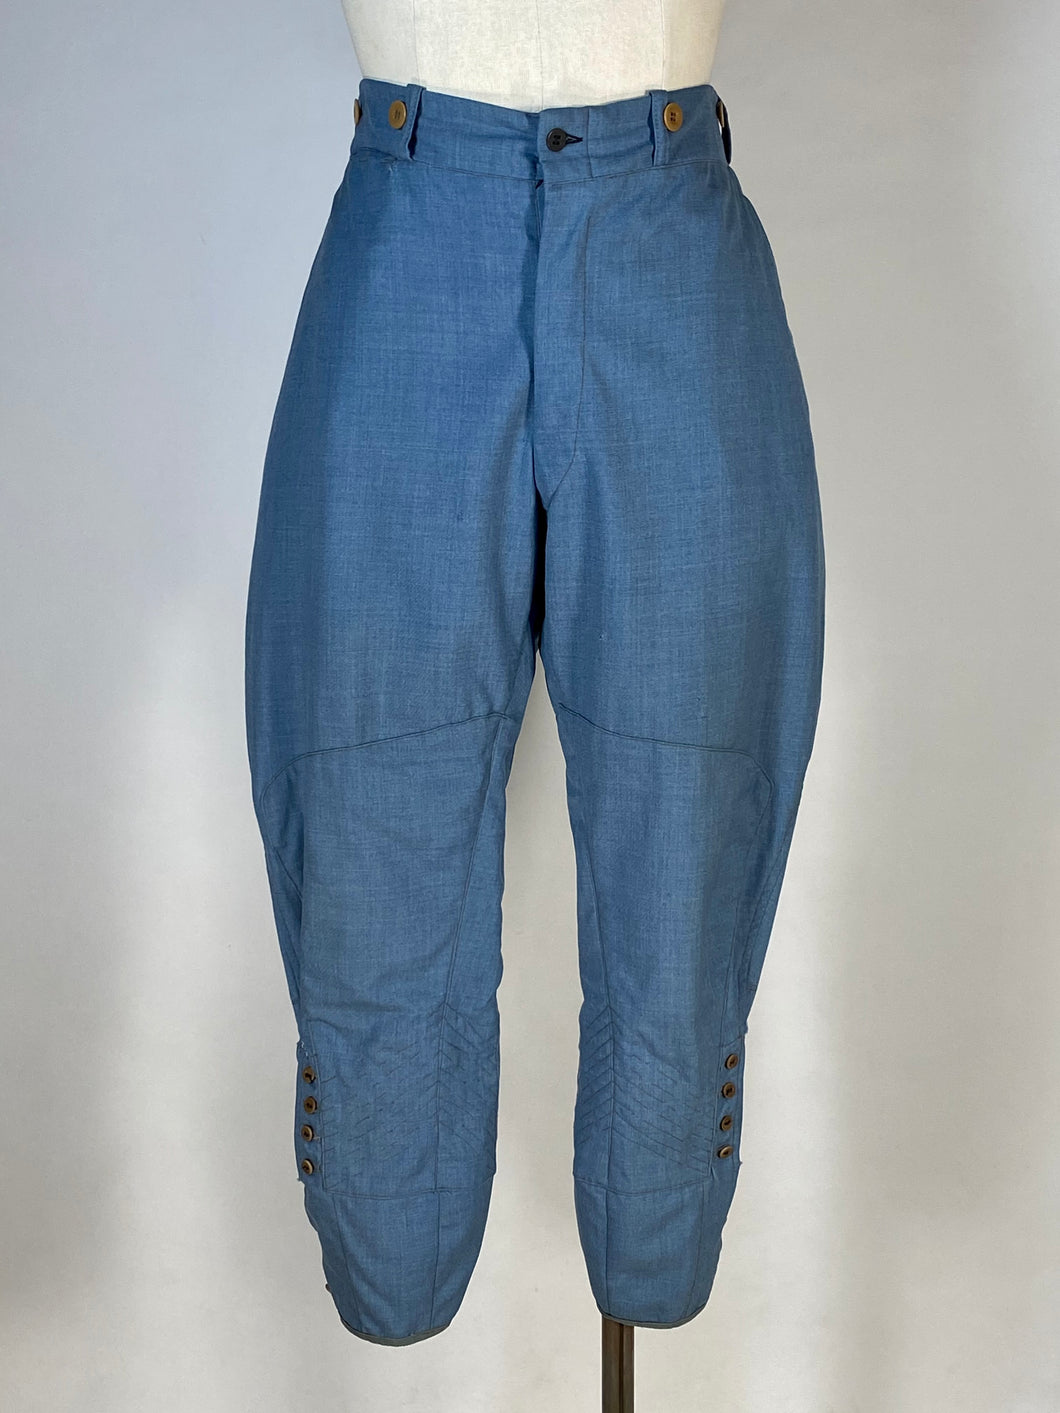 1920’s blue-grey lightweight wool jodhpurs English riding pants Unisex